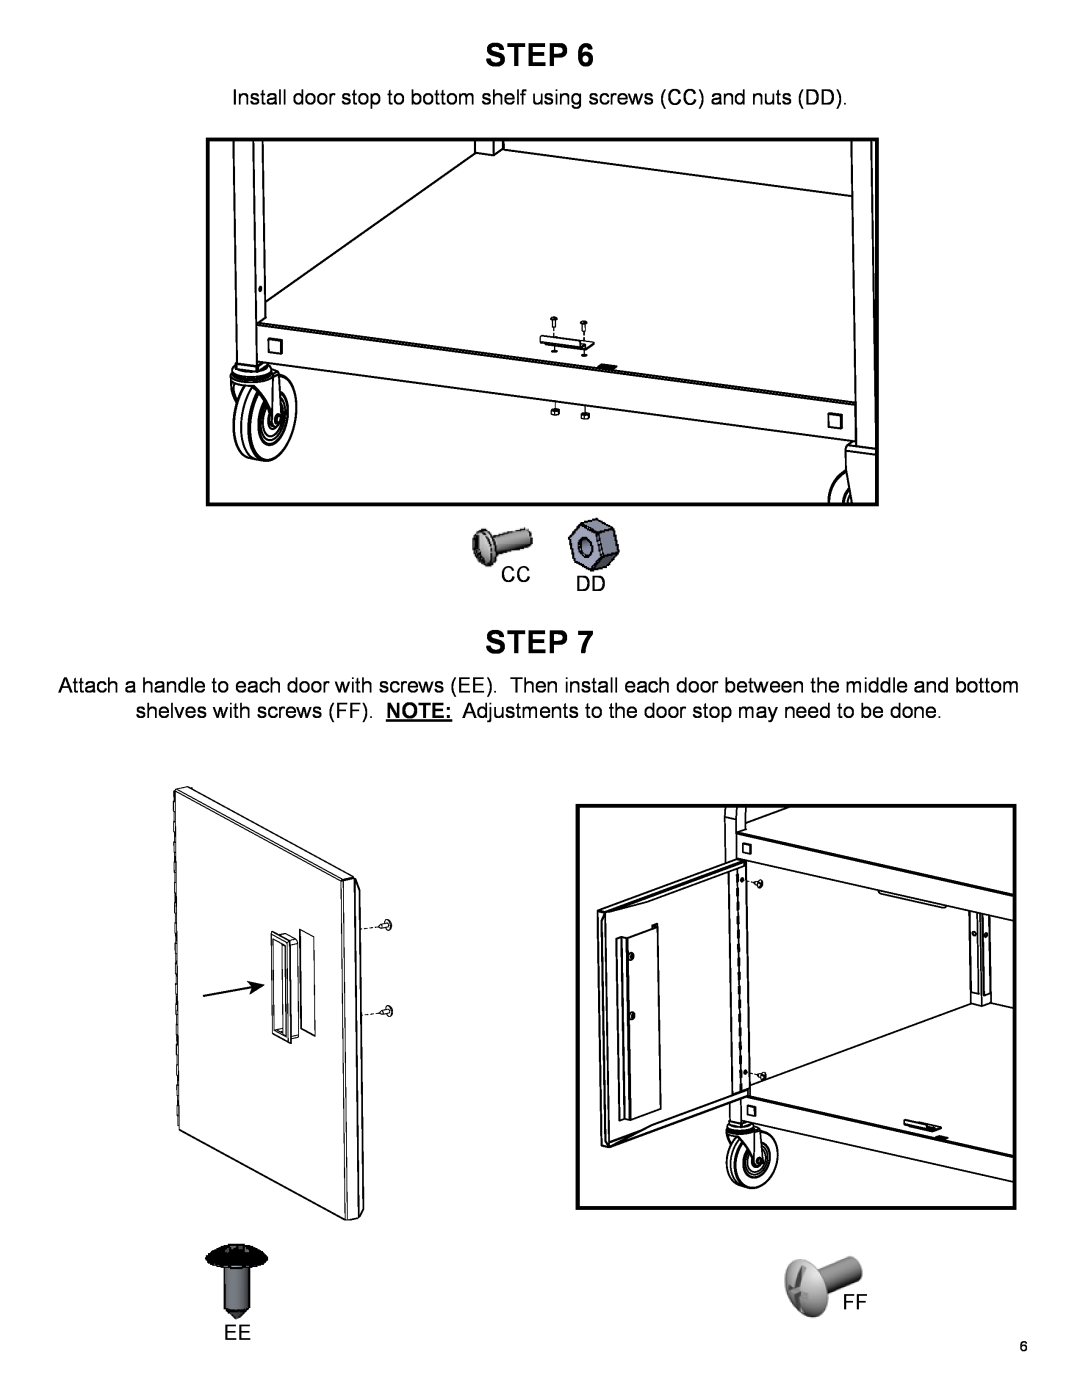 Bretford FP42ULC manual Install door stop to bottom shelf using screws CC and nuts DD, Step 